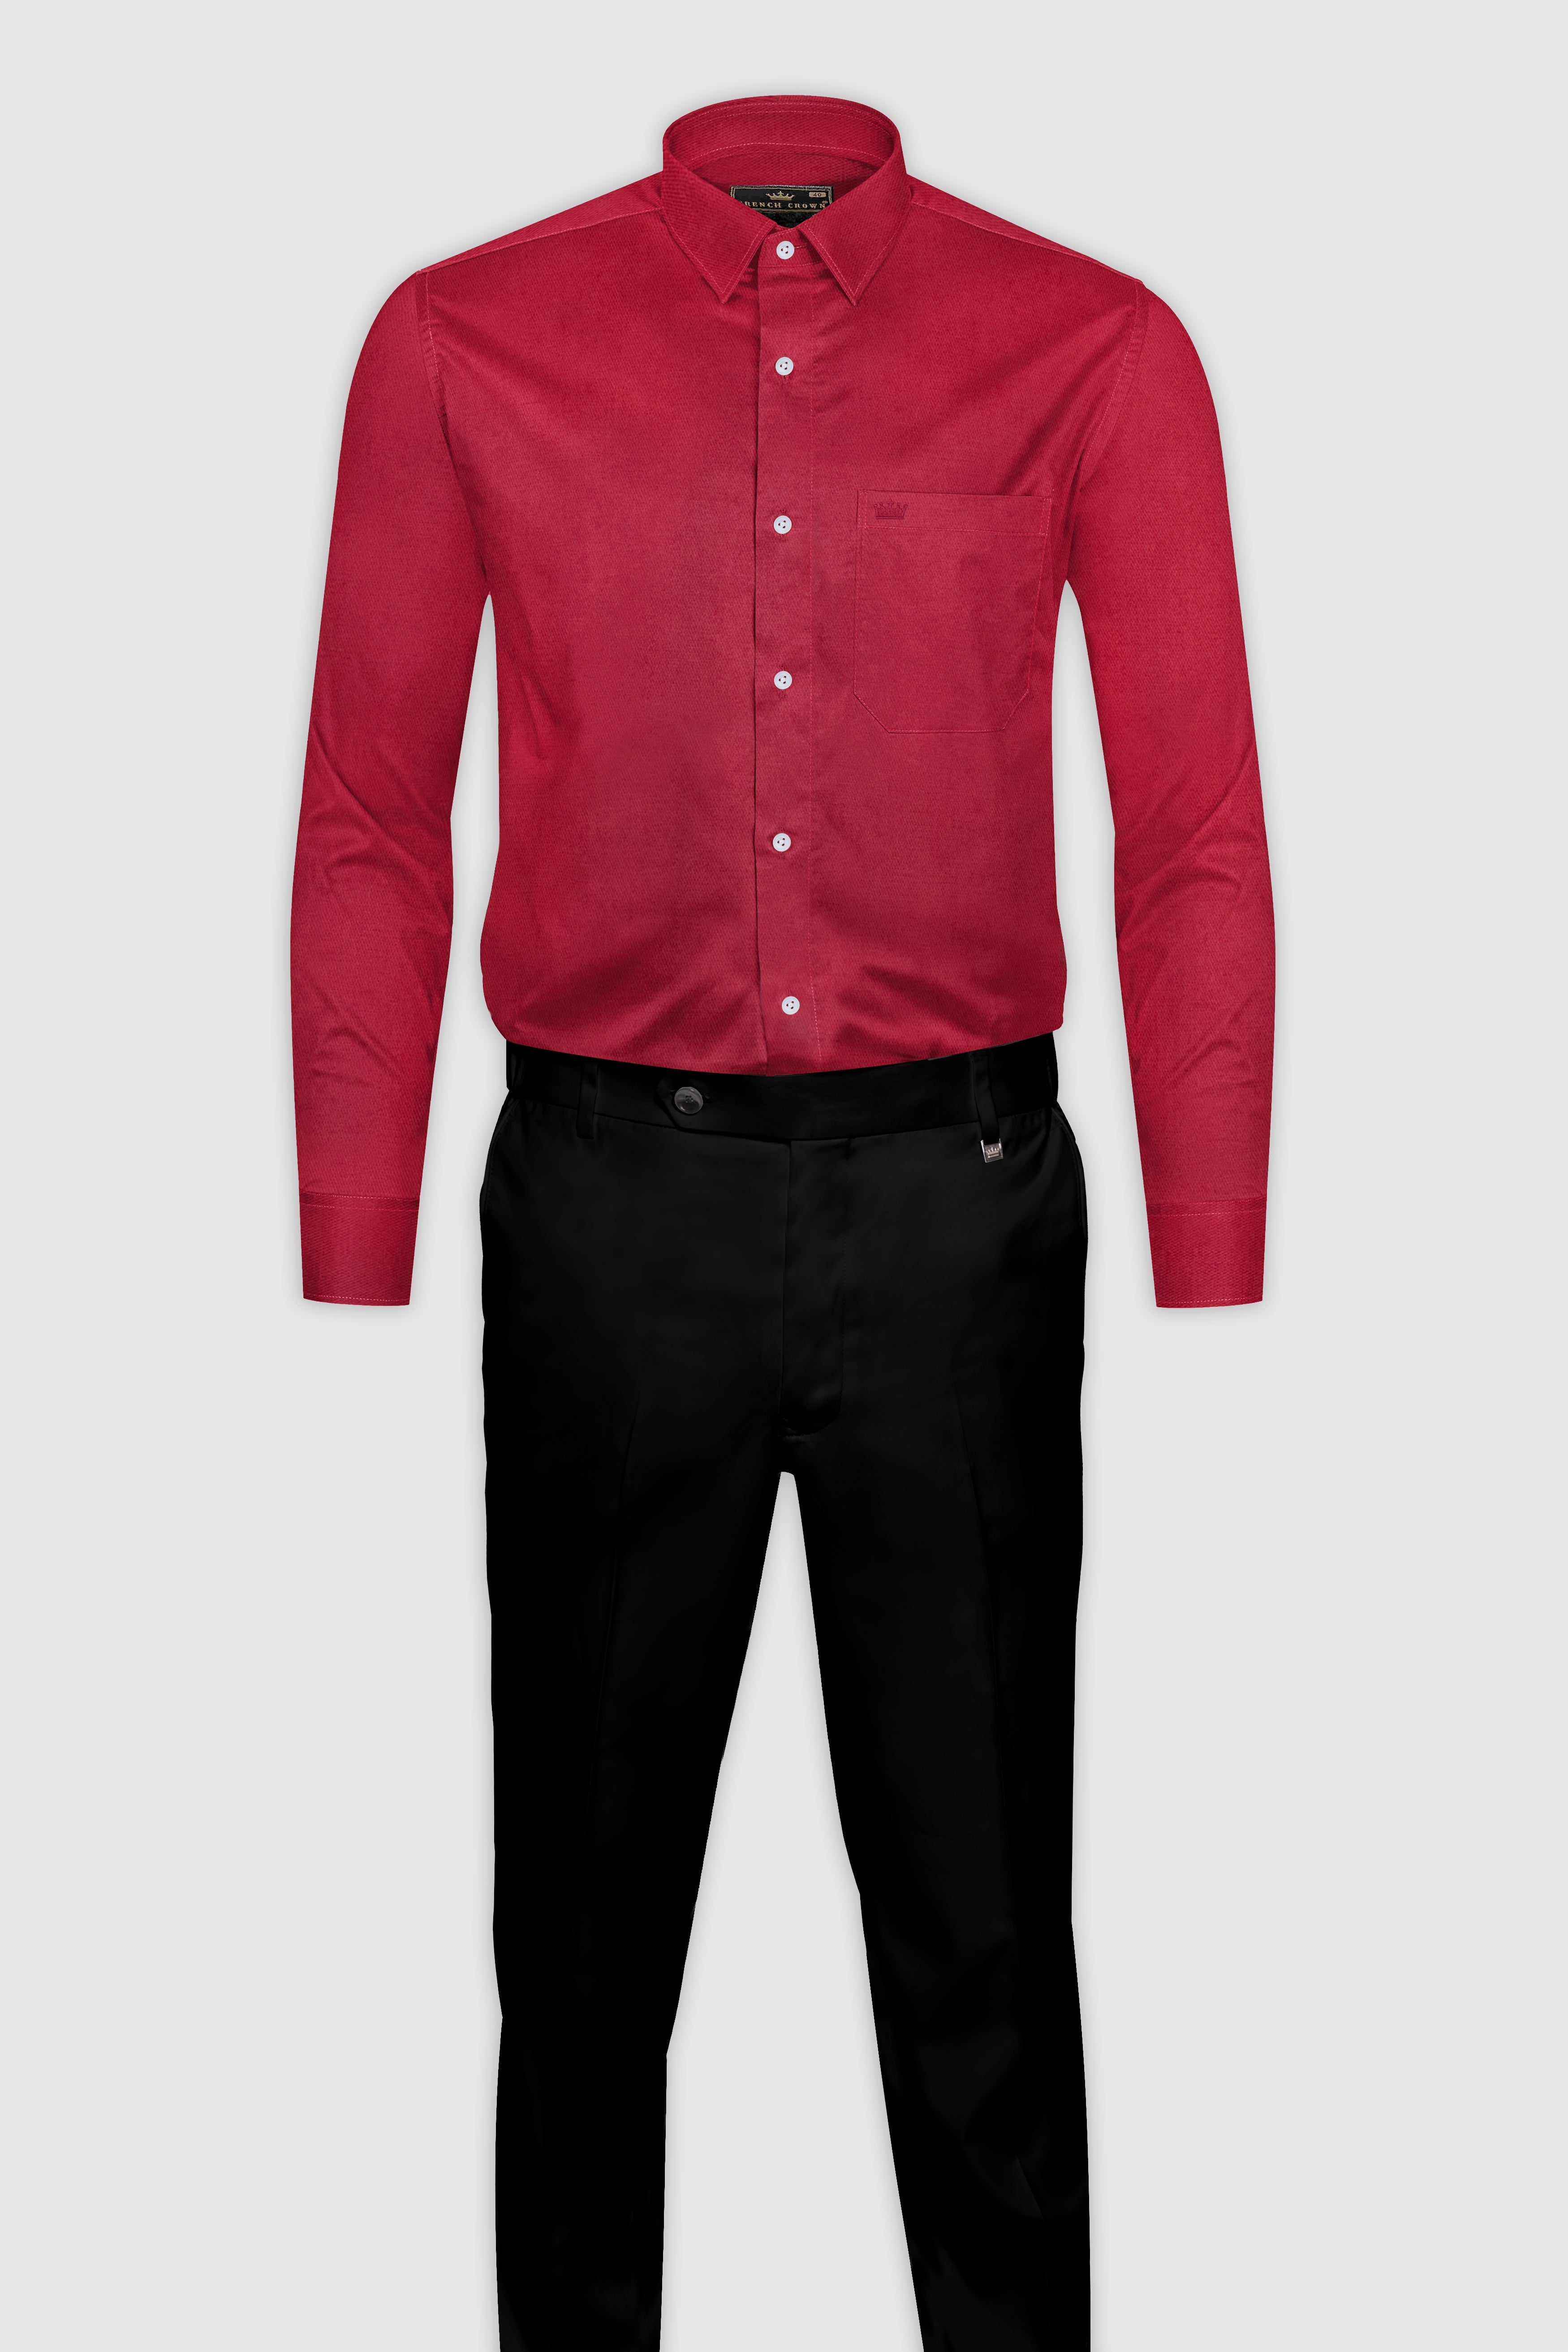 Stiletto Red Royal Oxford Cotton Shirt